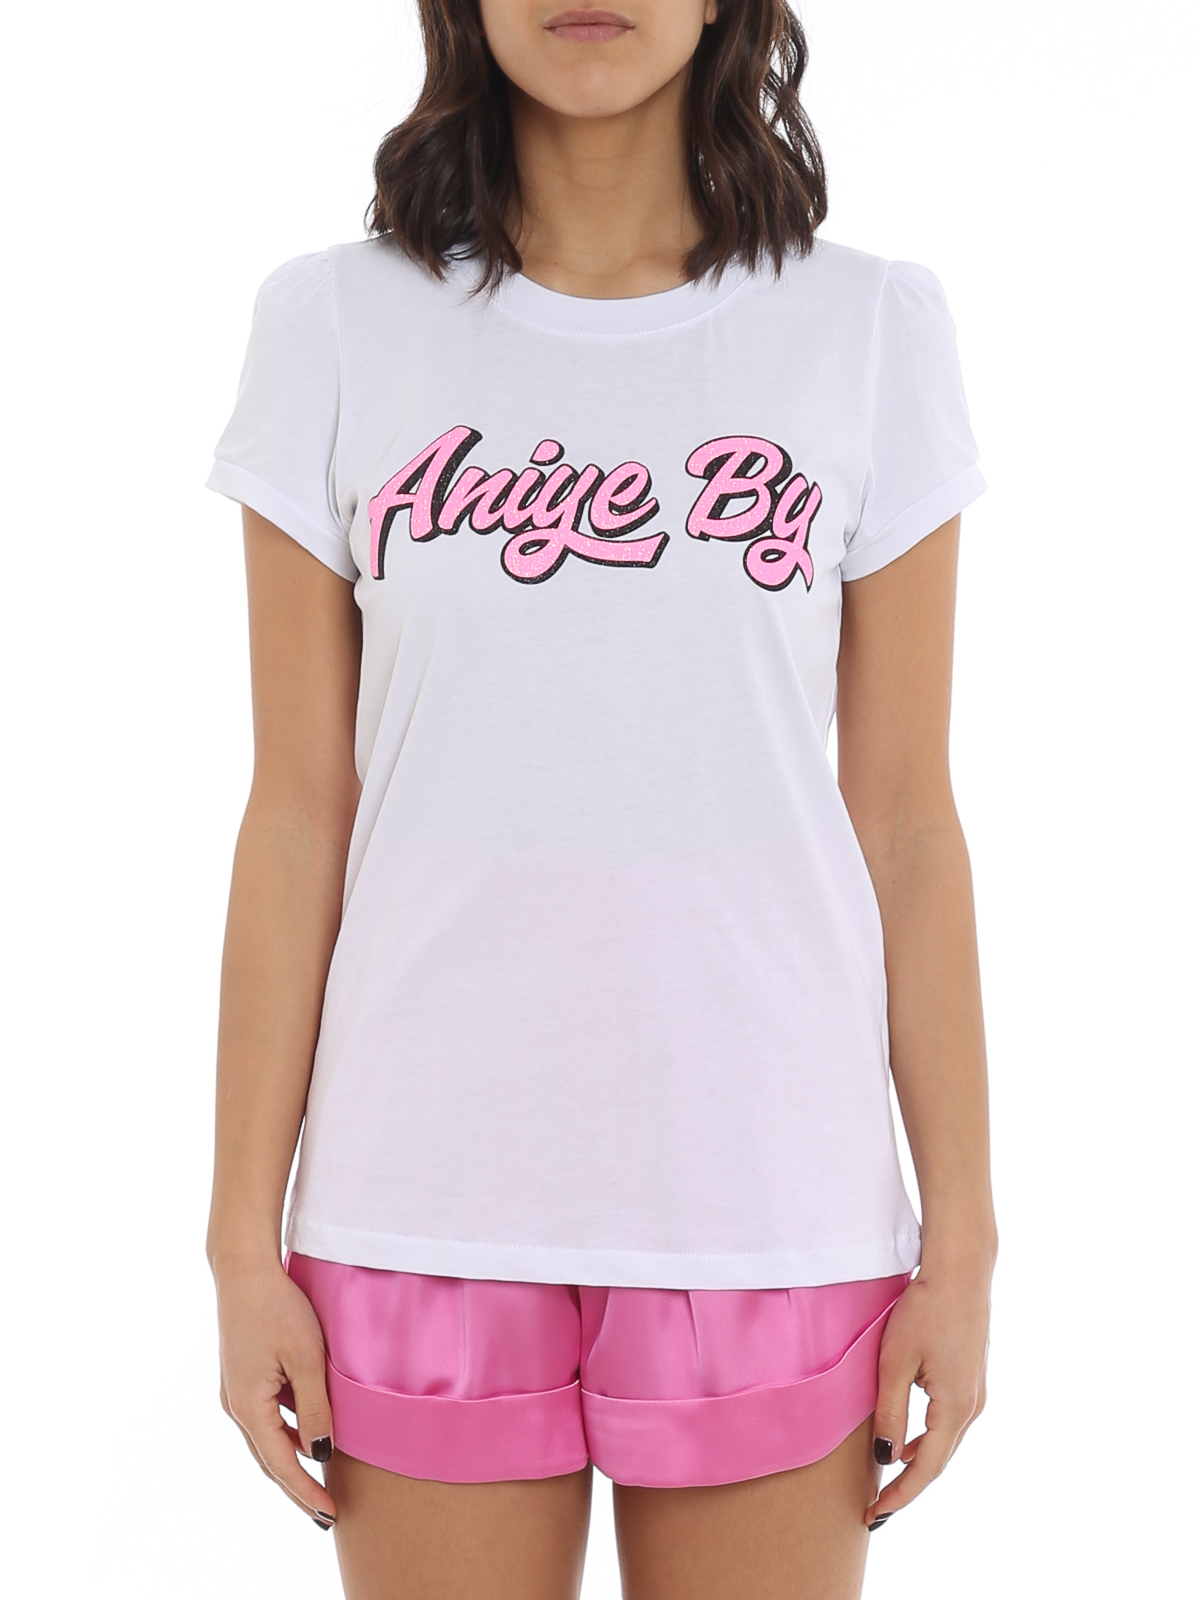 Aniye By - Maty T-shirt - 18563200680 | Shop online at